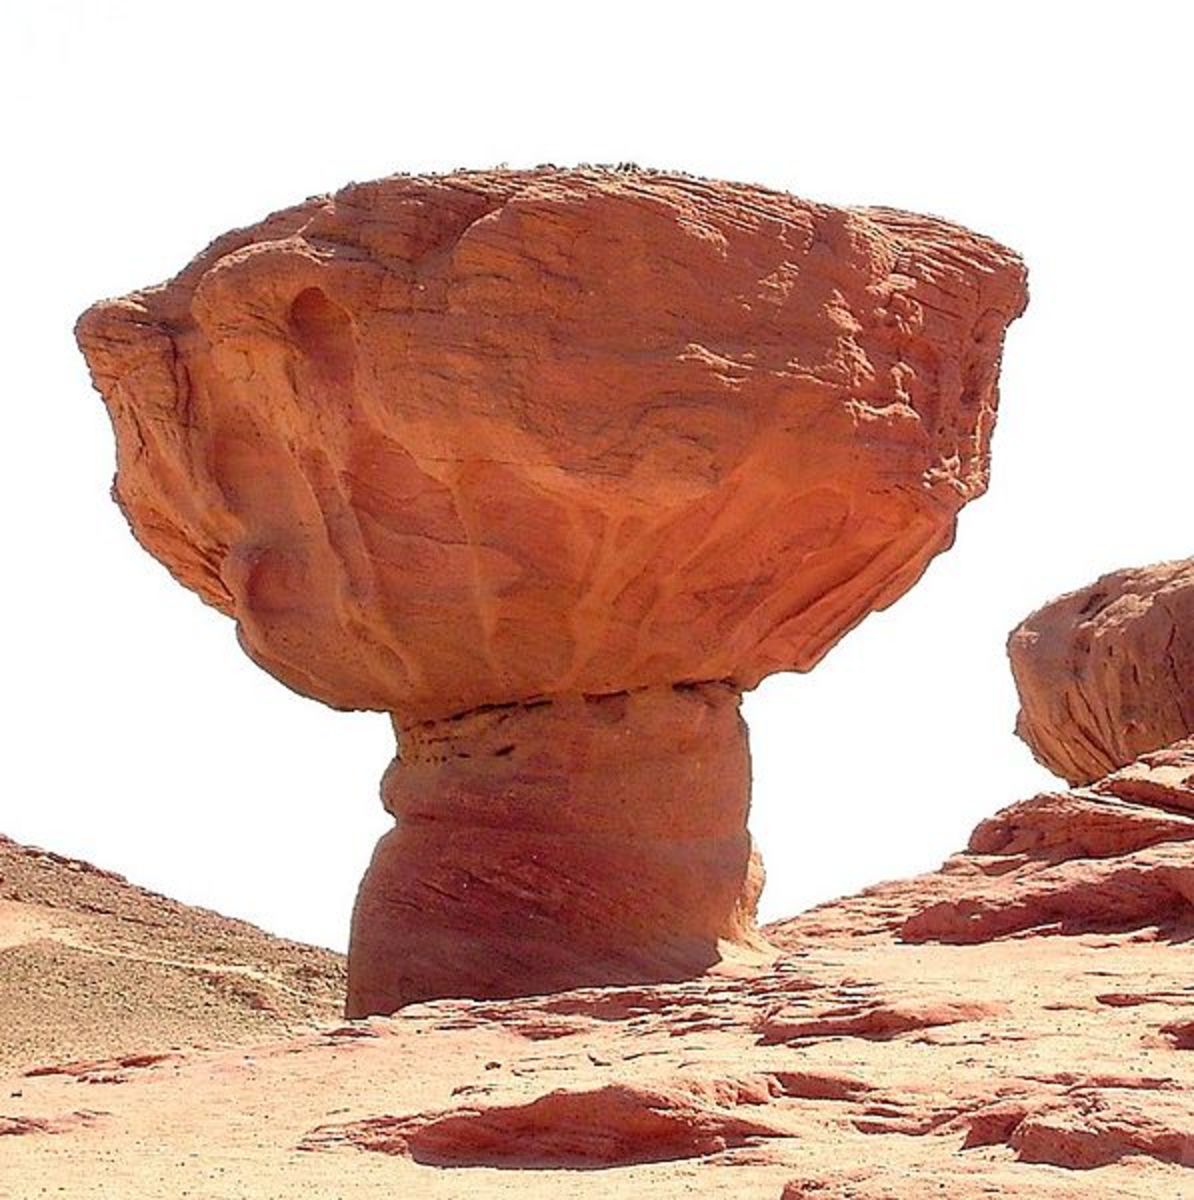 mushroom-shaped-rocks